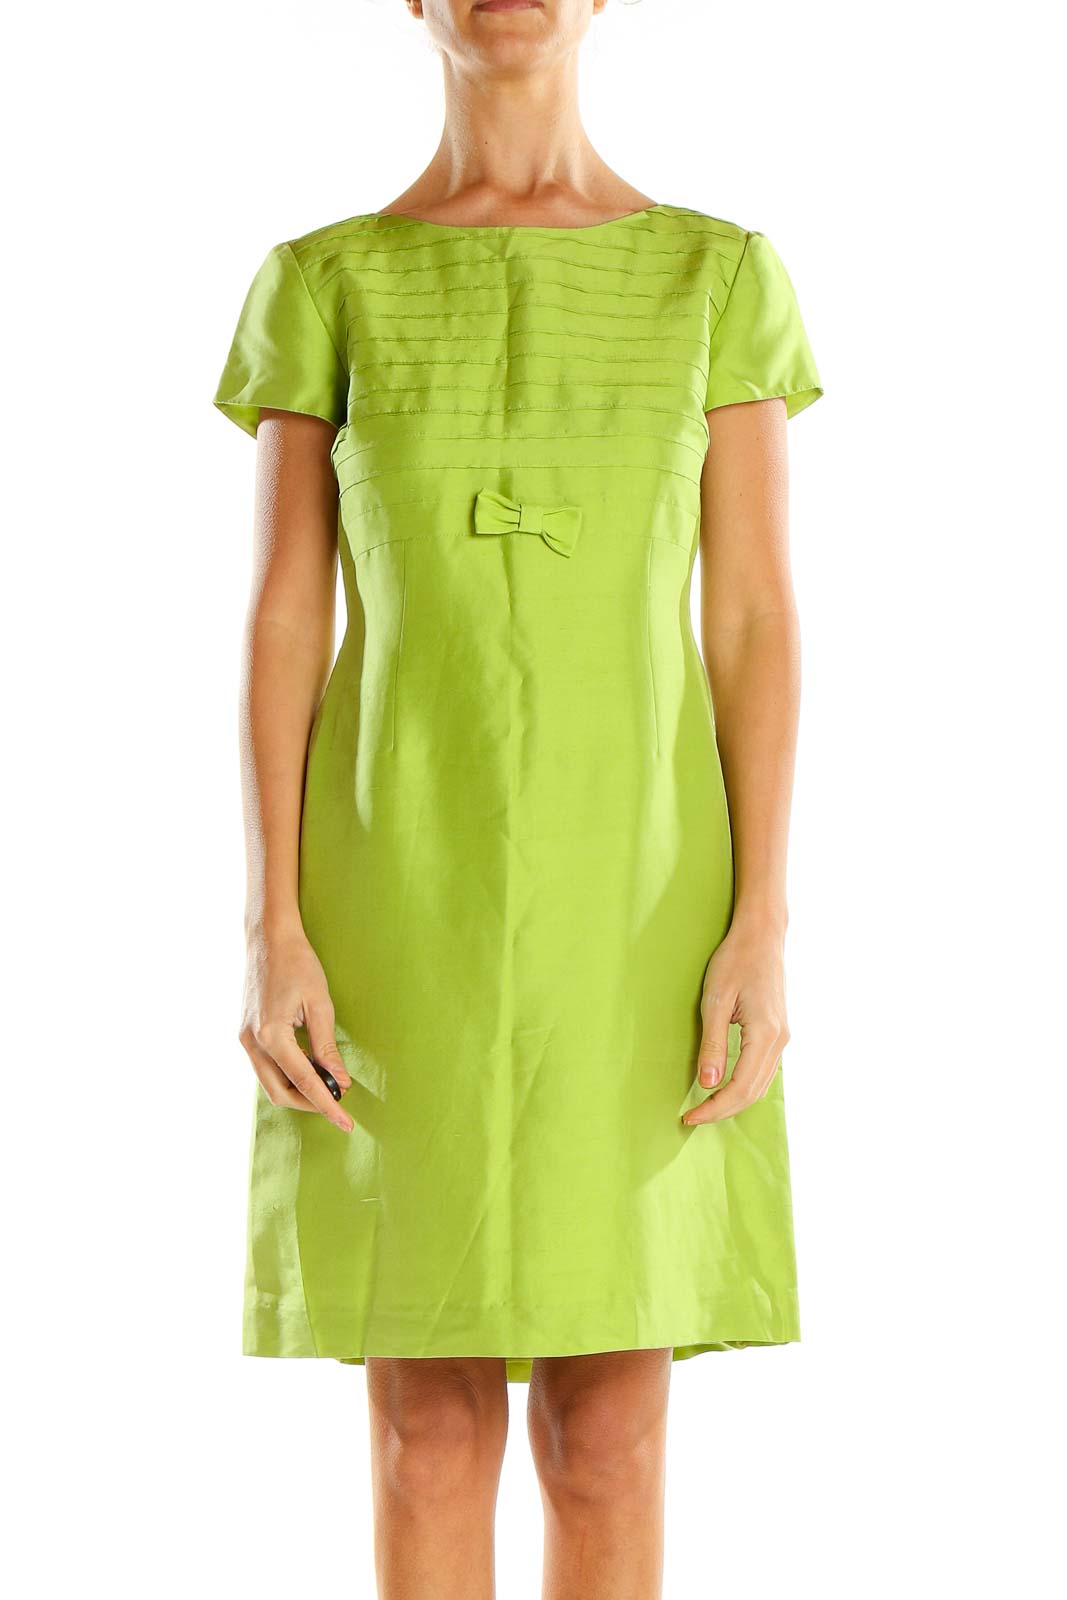 Green Retro A-Line Dress Front